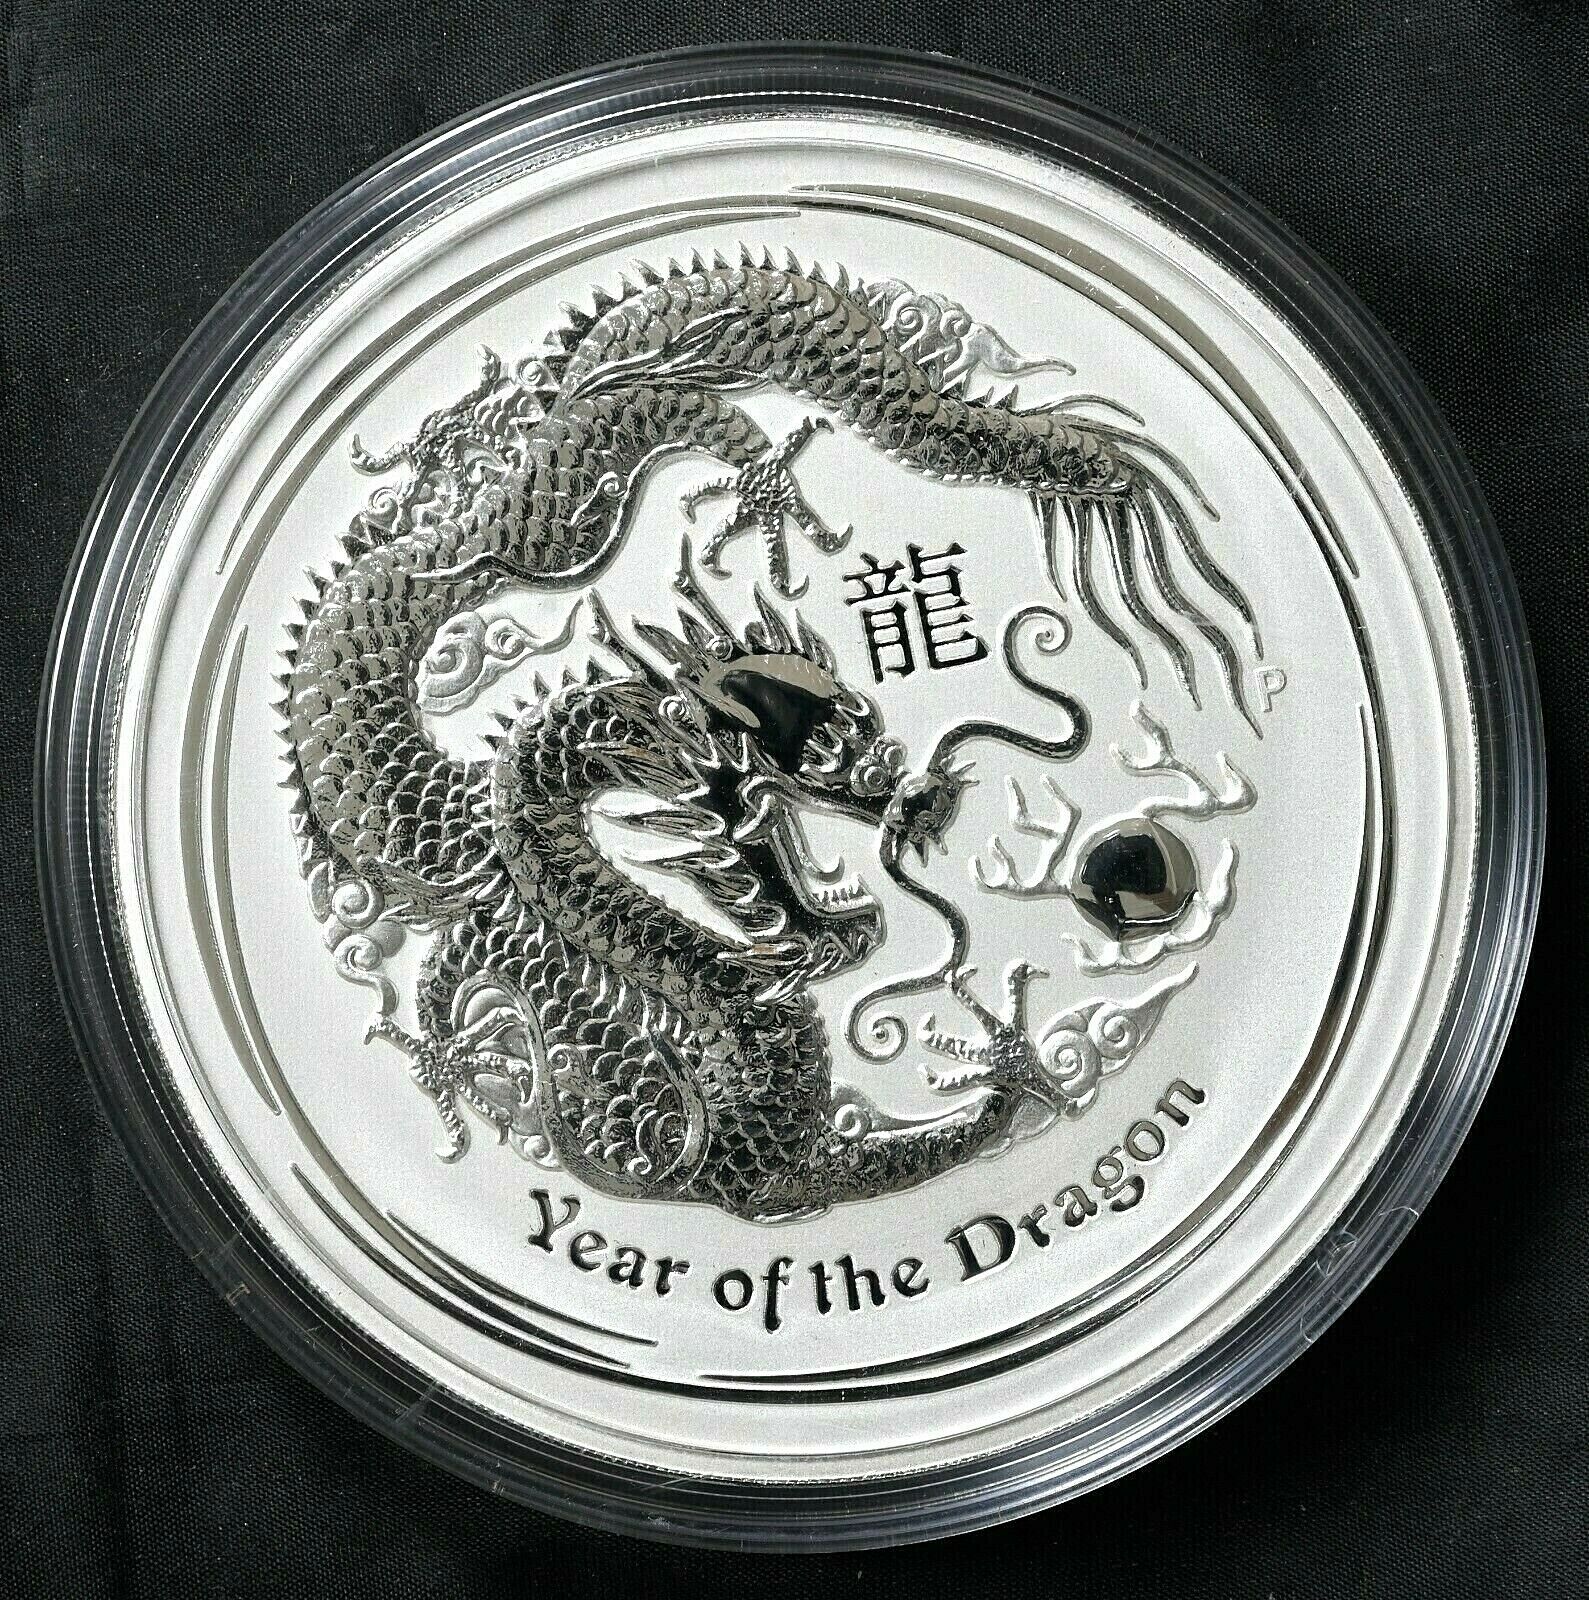 2012 1 Kilo Australian Lunar Dragon Silver Coin - OMEGA BULLION LLC